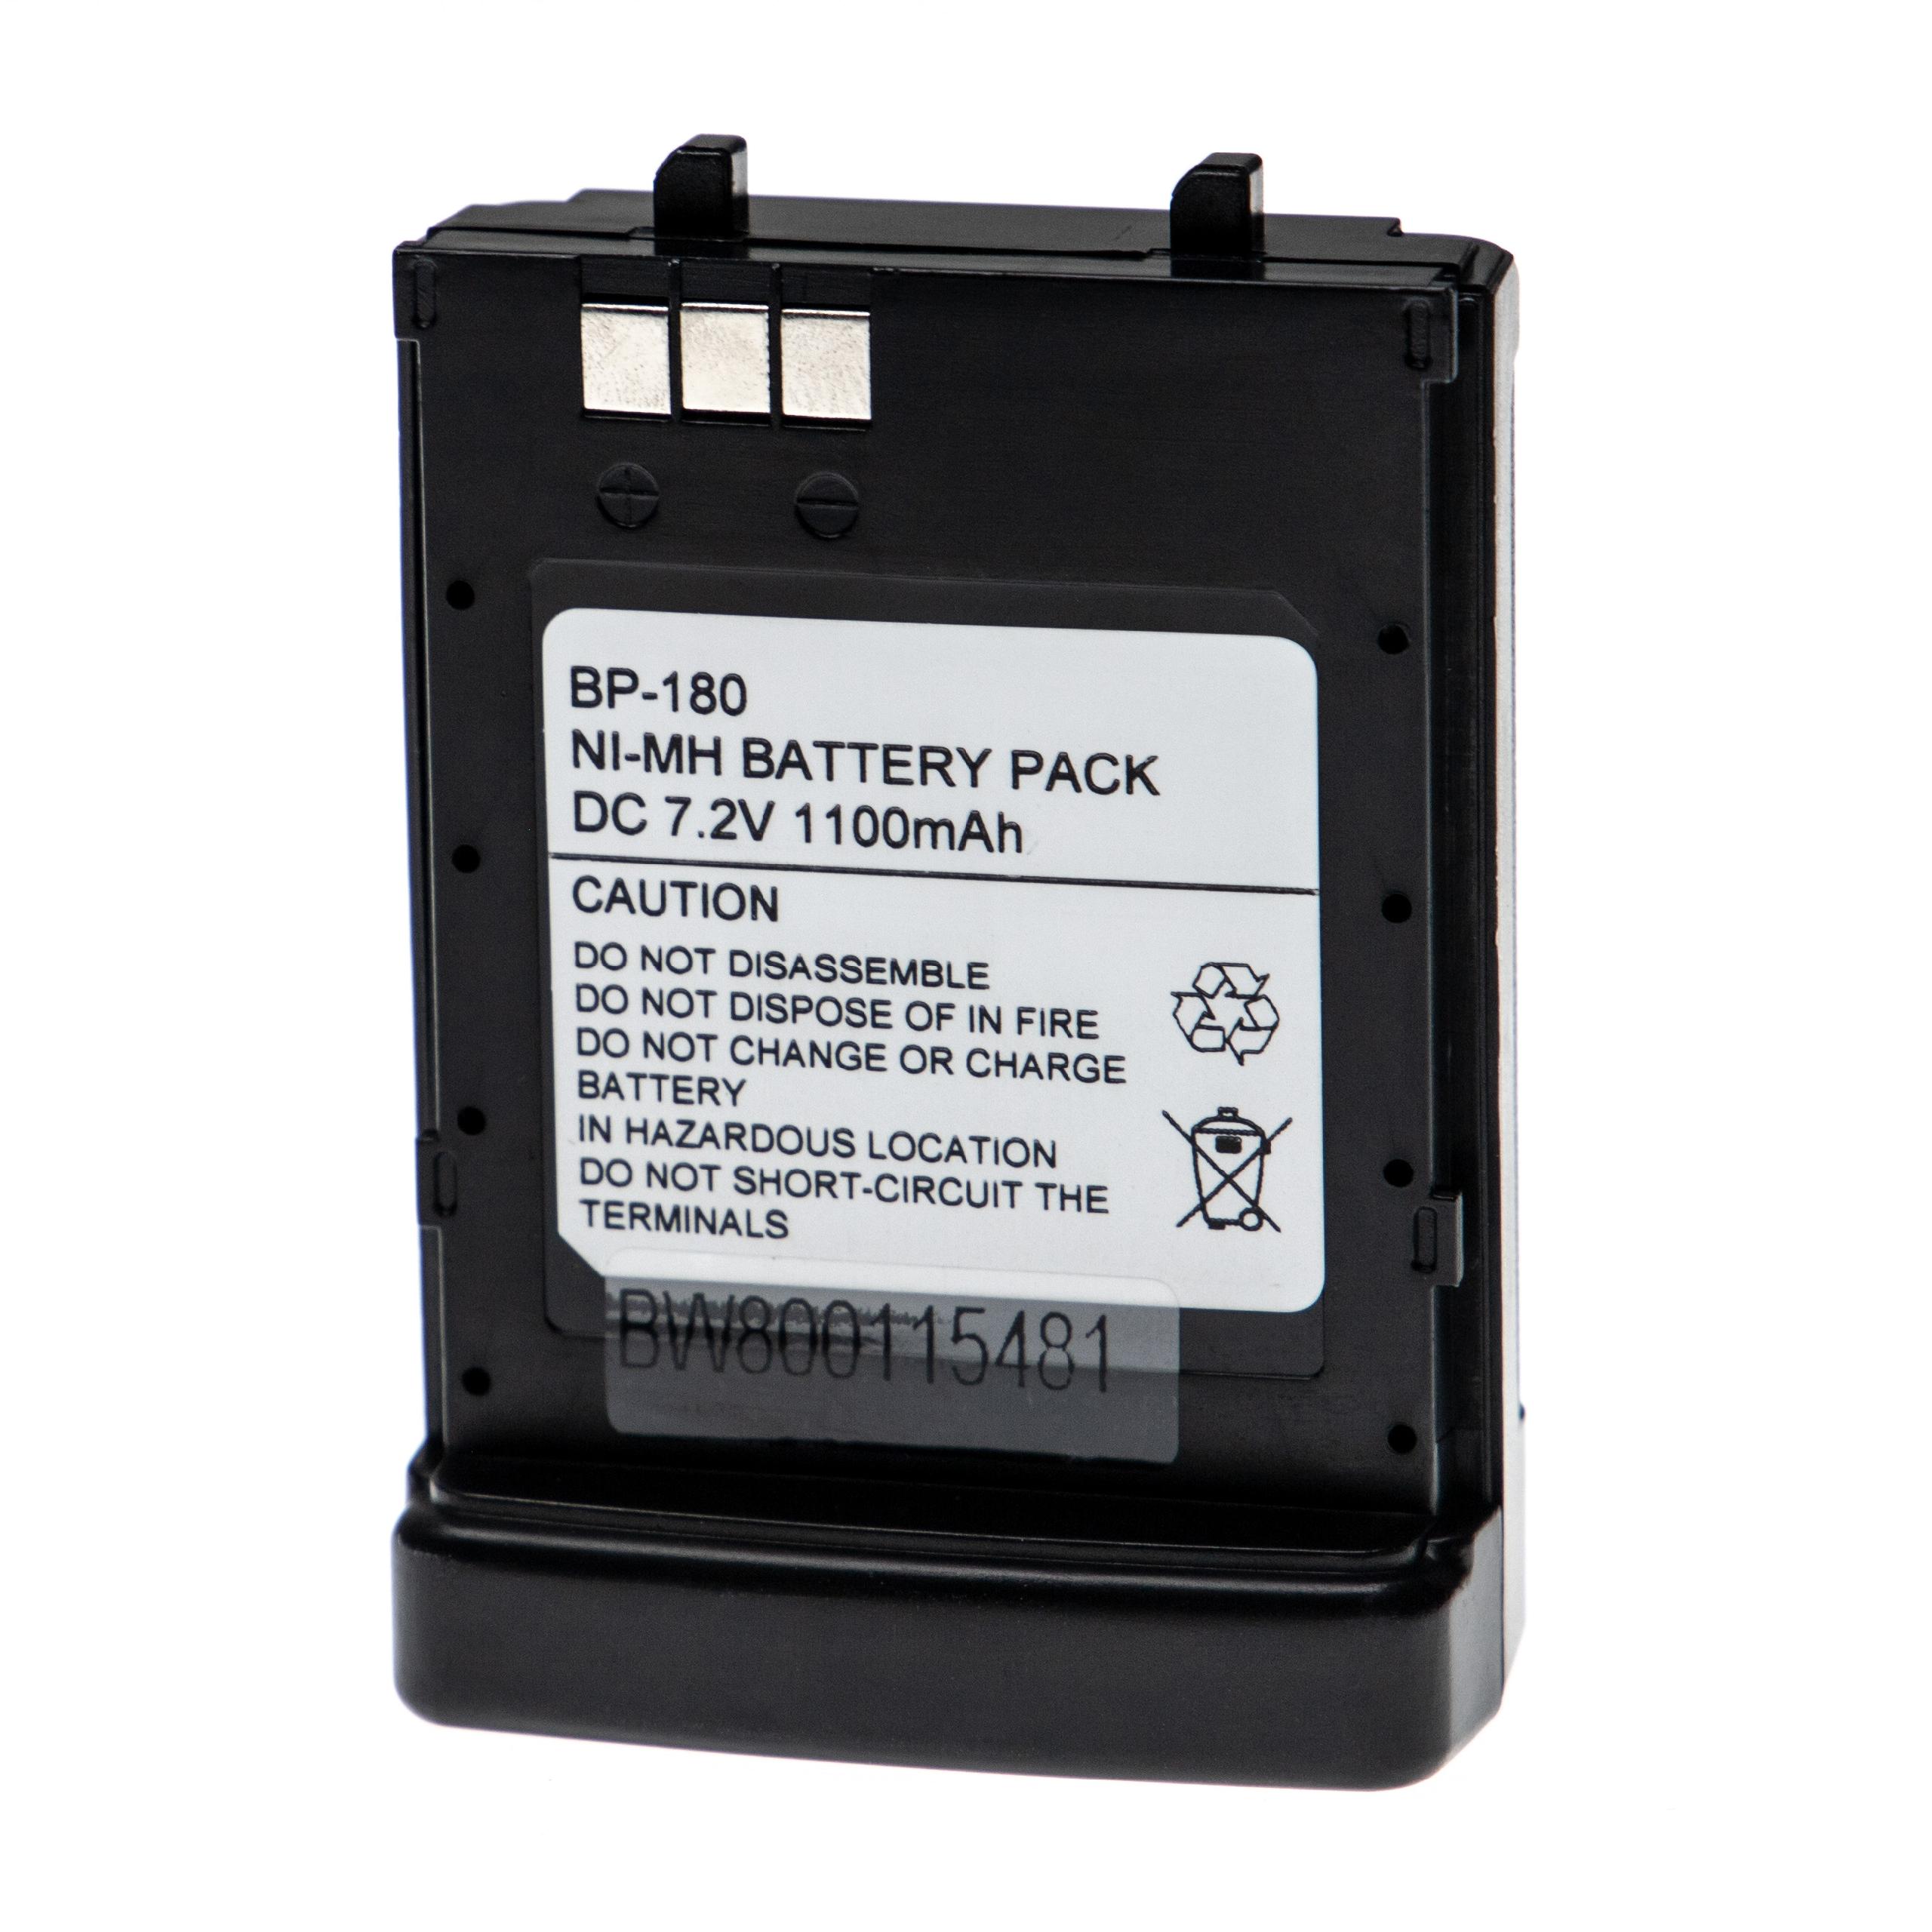 Radio Battery Replacement for Icom BP-173, BP-180H, BP-180 - 1100mAh 7.2V NiMH